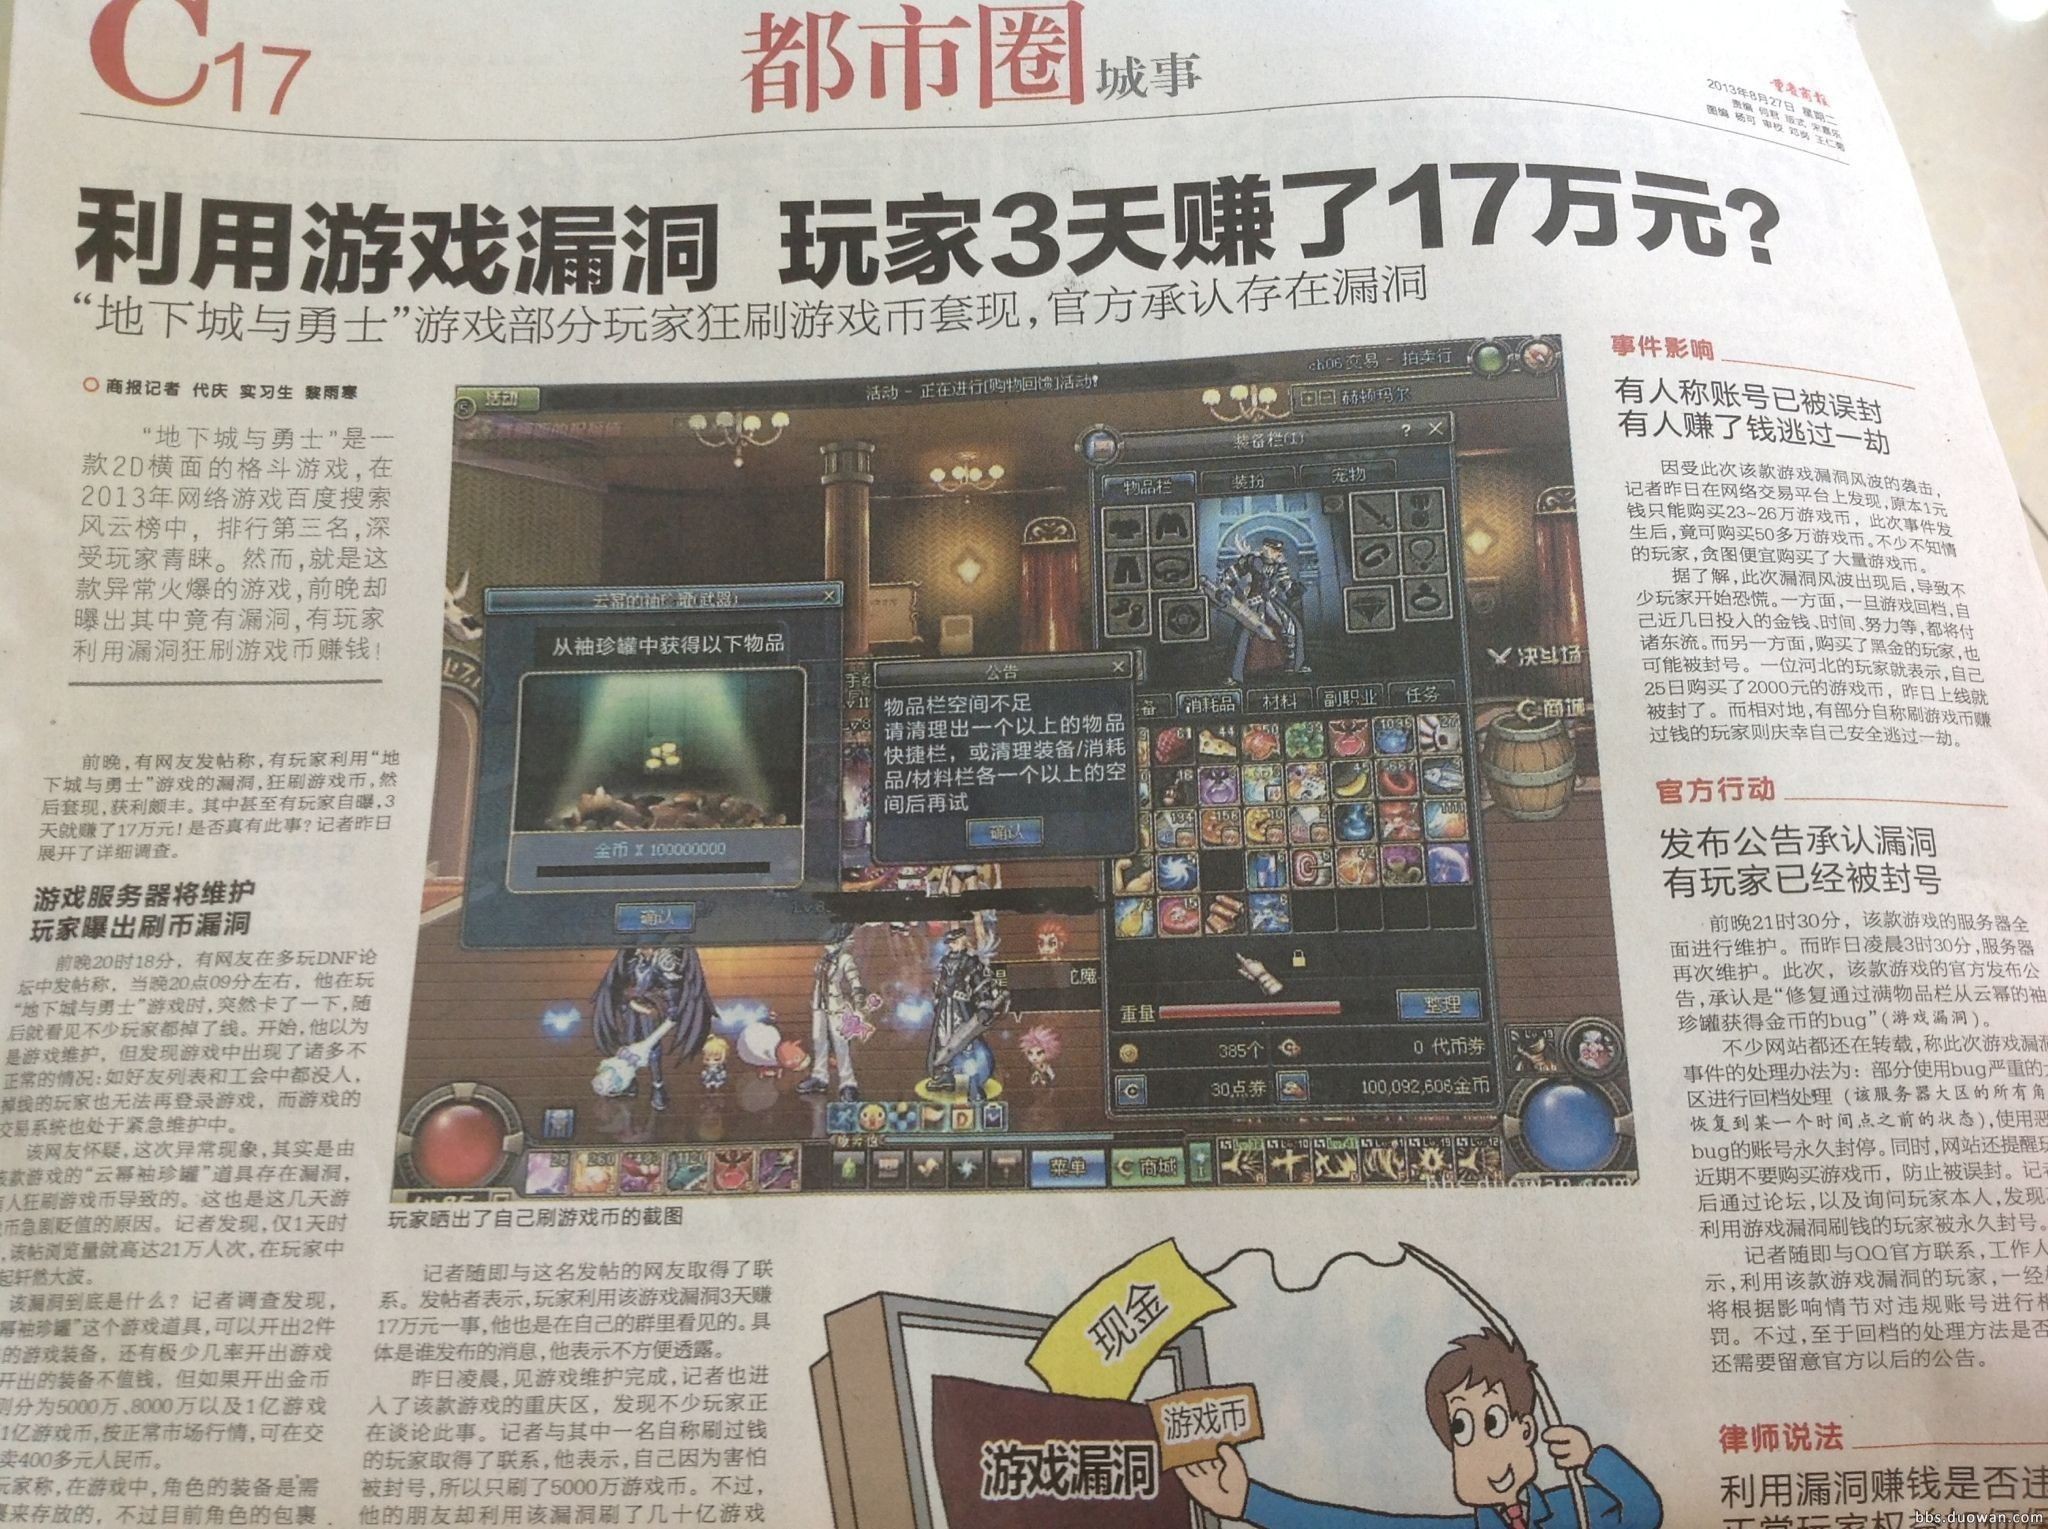 dnf云幂bug卡金币上报纸 玩家利用漏洞3天狂赚17万RMB